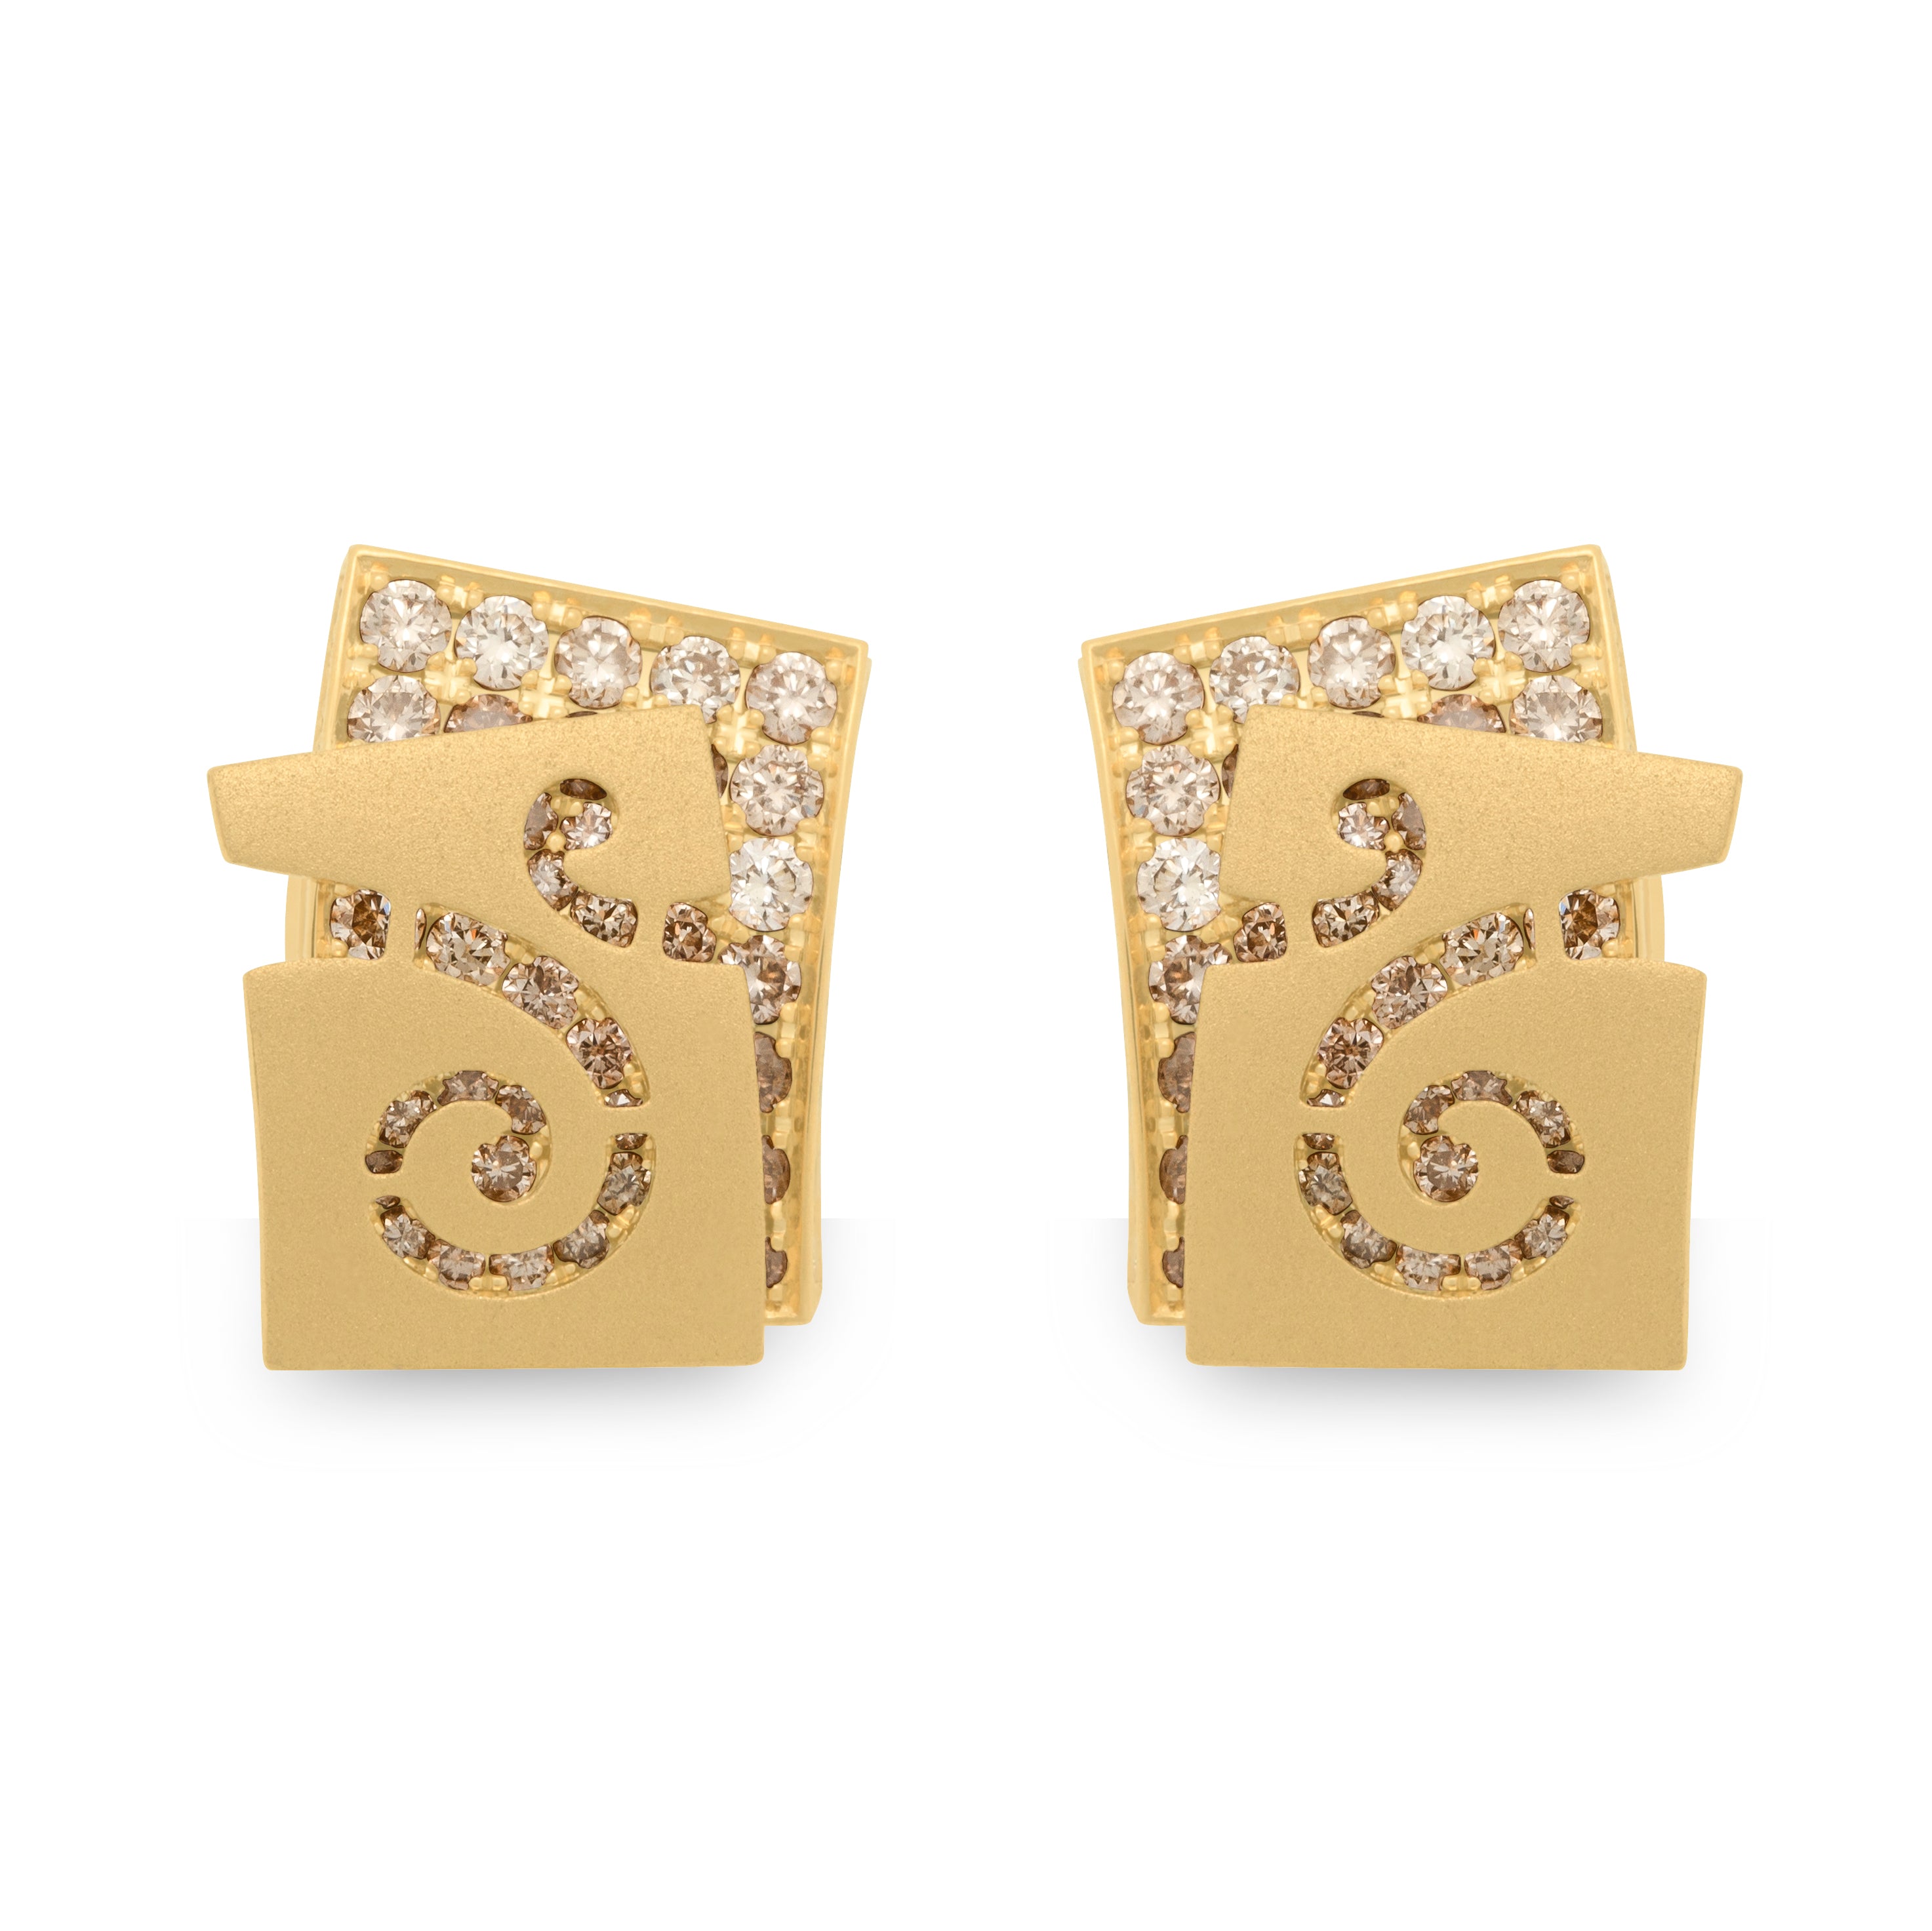 E 0003-4, 18K Yellow Gold, Champagne Diamonds Earrings